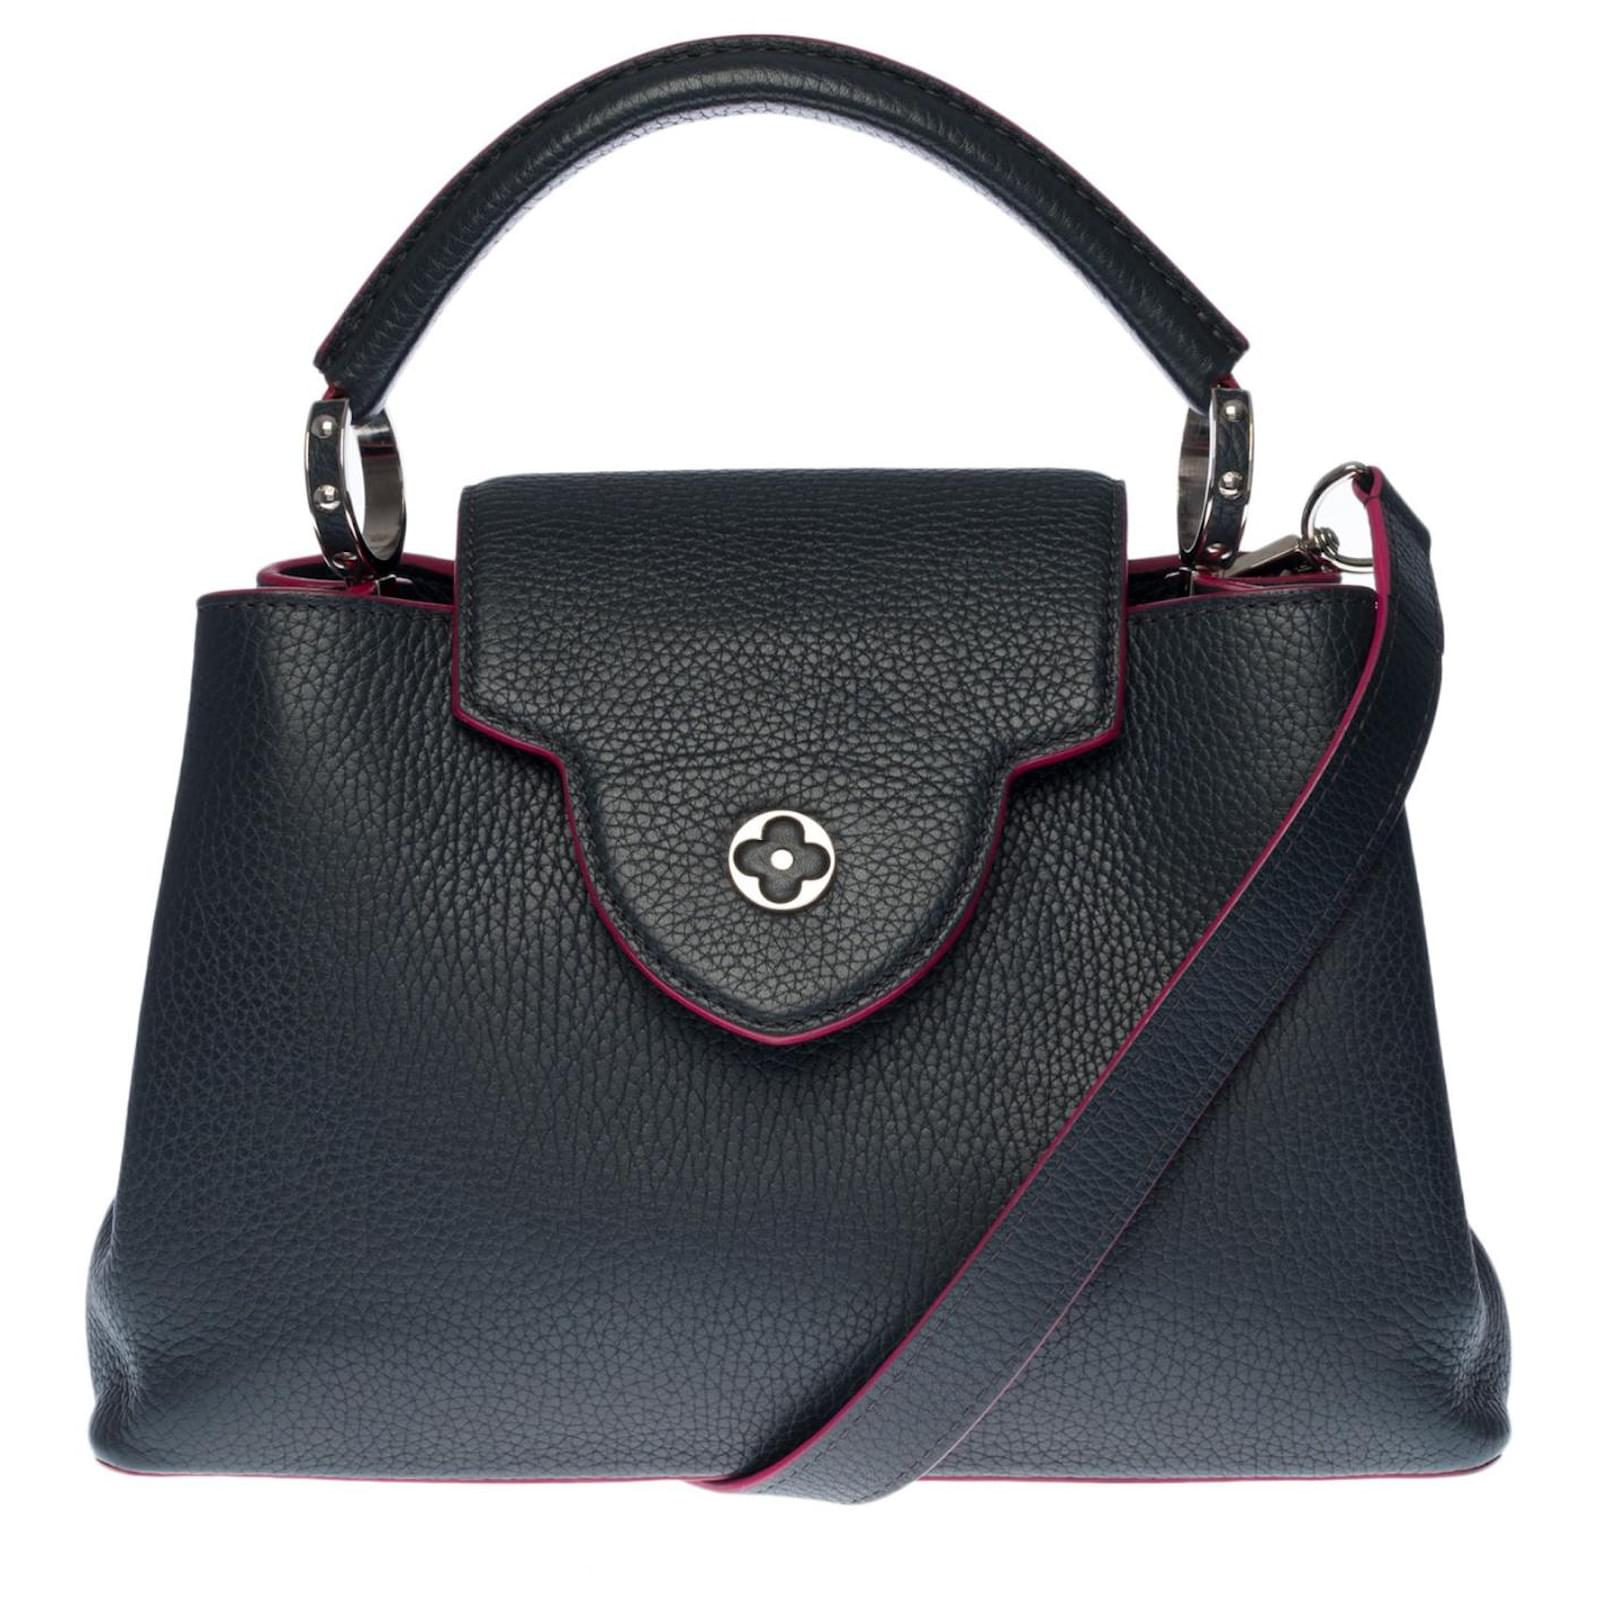 Splendid Louis Vuitton Capucines BB bag limited two-tone series is